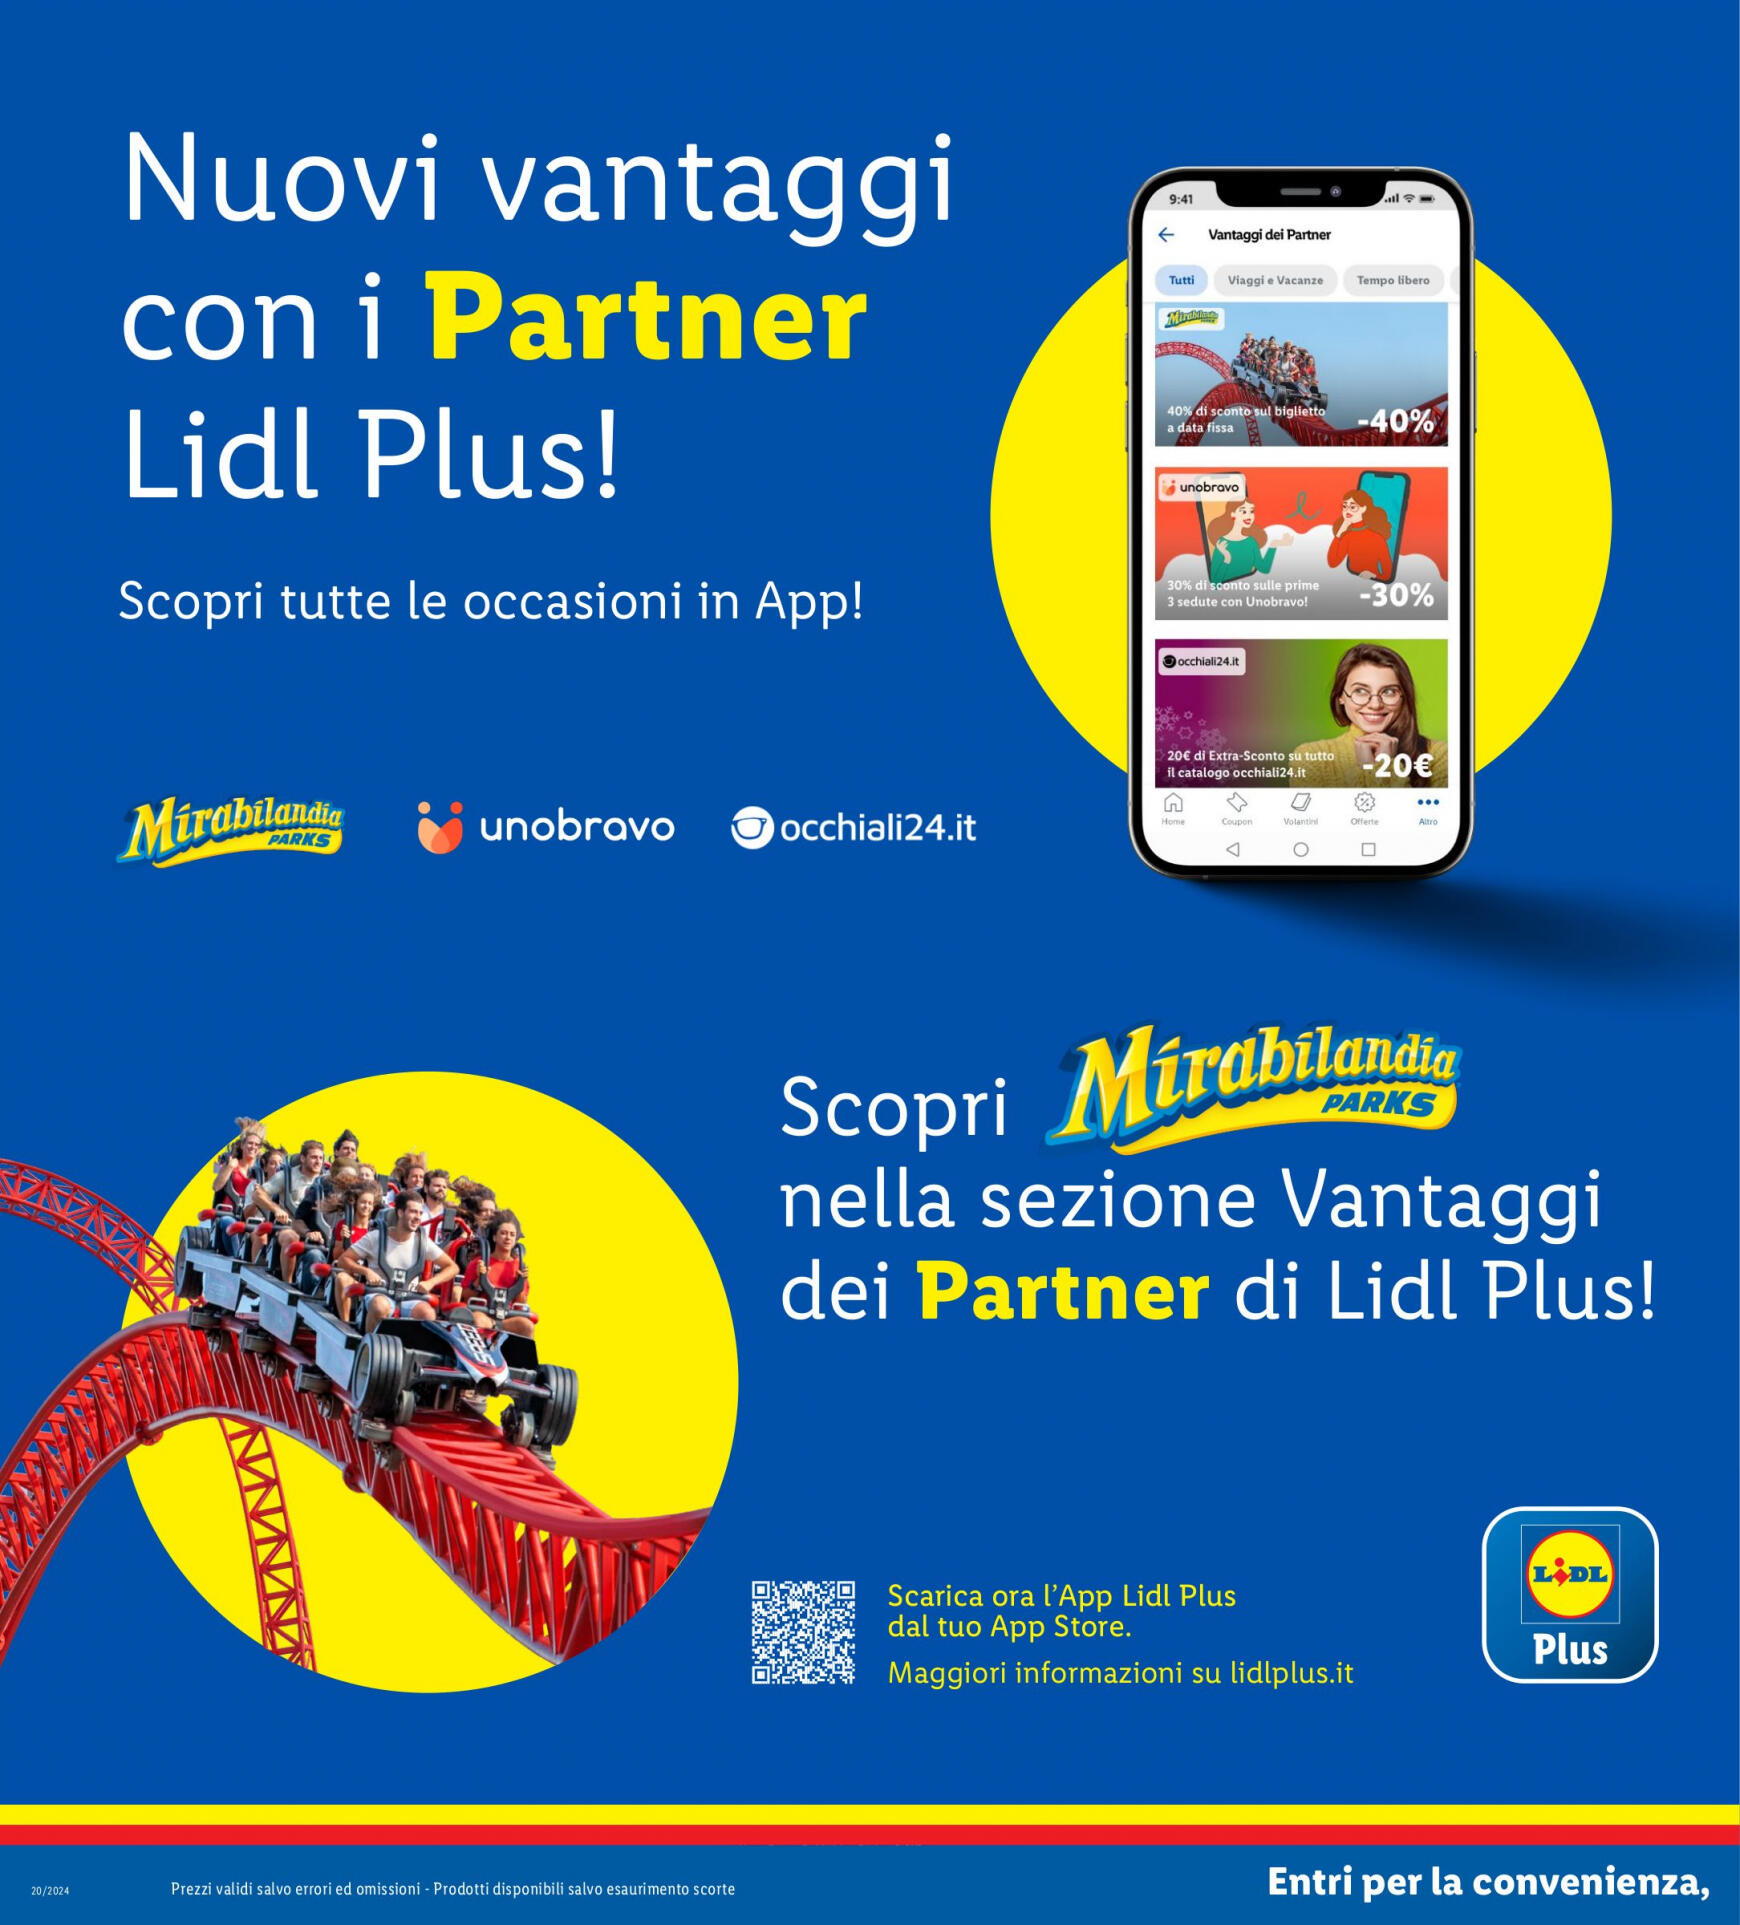 lidl - Nuovo volantino Lidl 13.05. - 19.05. - page: 14